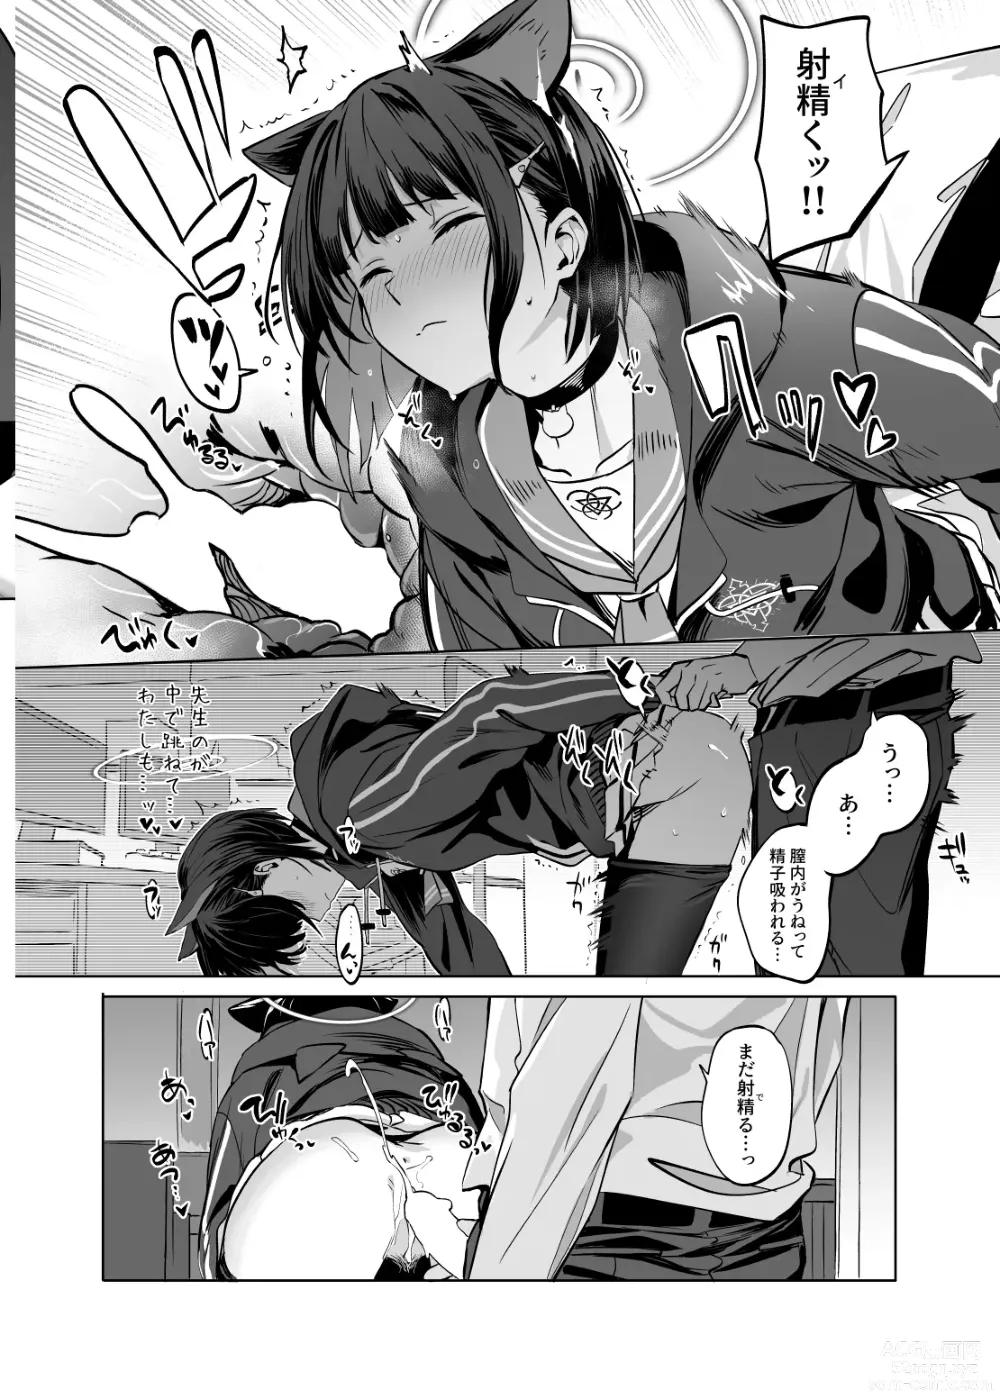 Page 15 of doujinshi Kyouyama Kazusa no Torisetsu - Tetourner le Chat dans la casserole